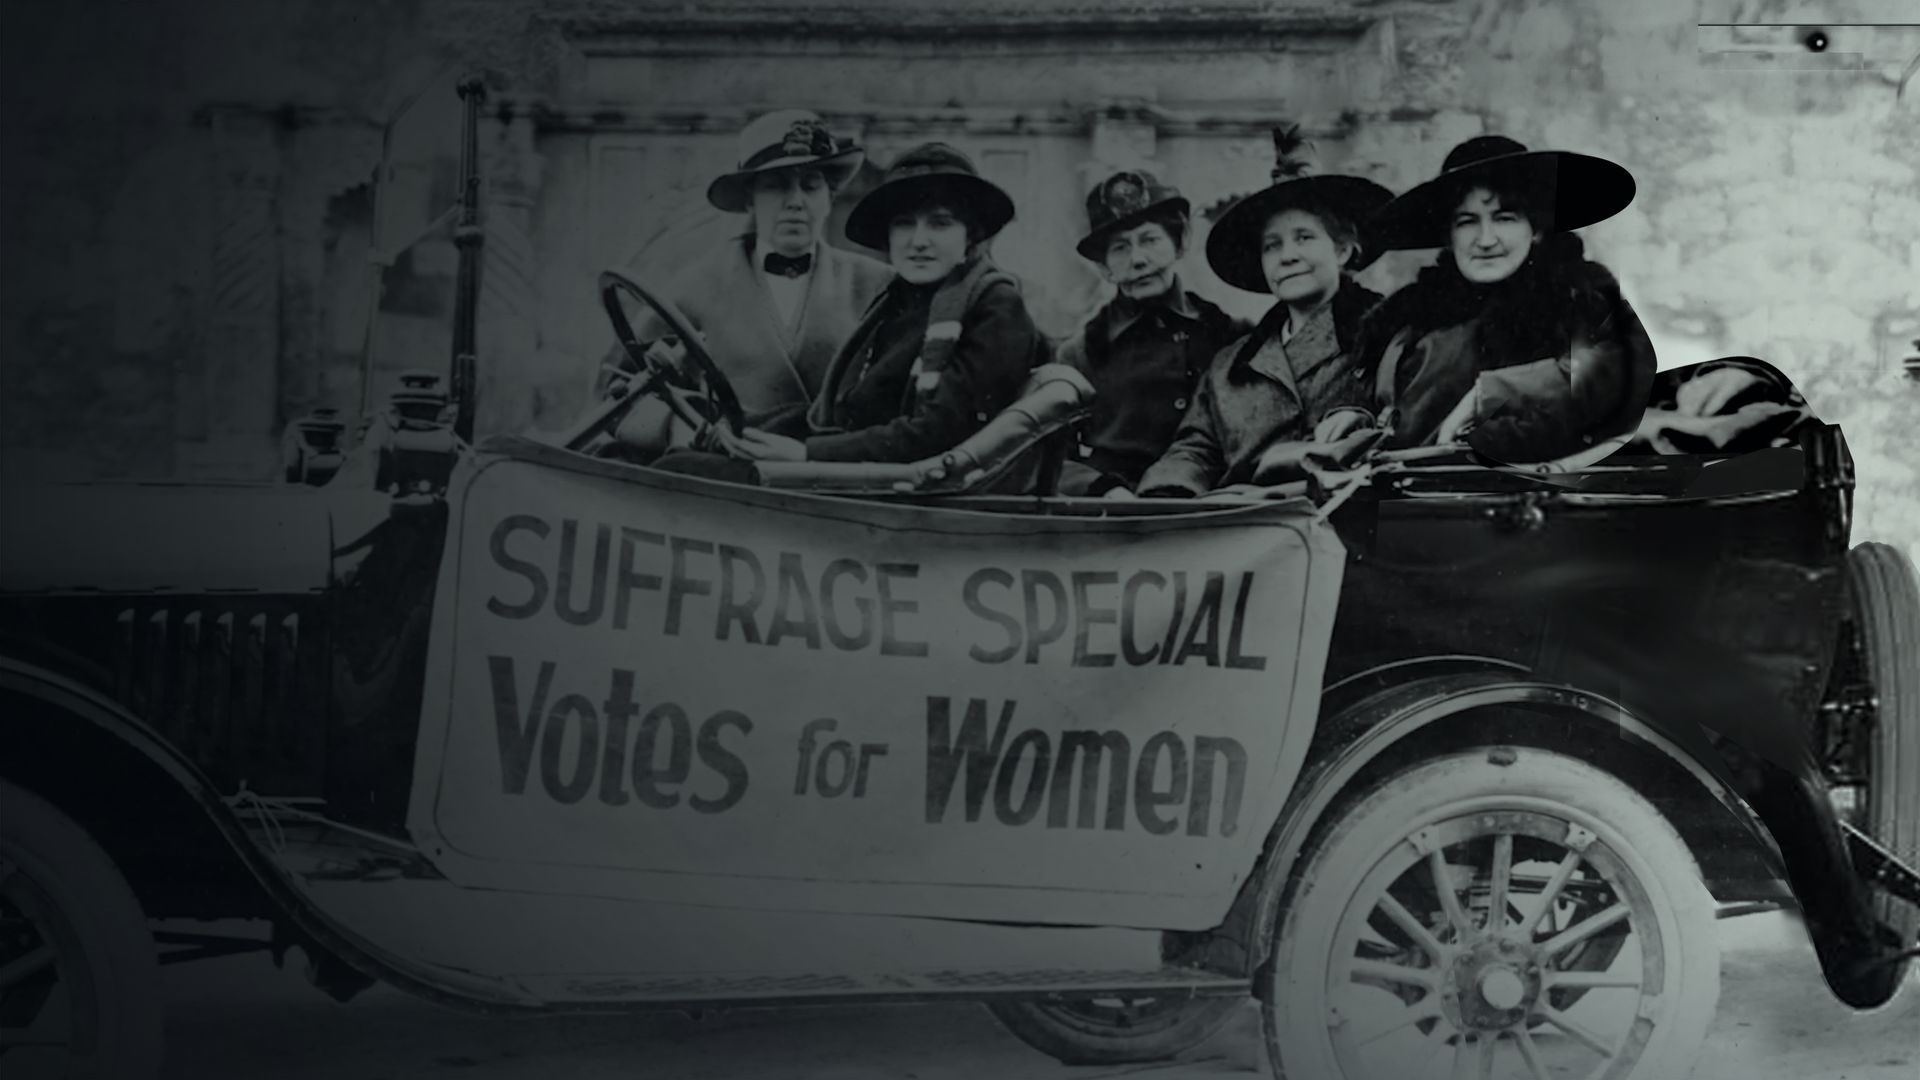 Perfect 36: When Women Won the Vote